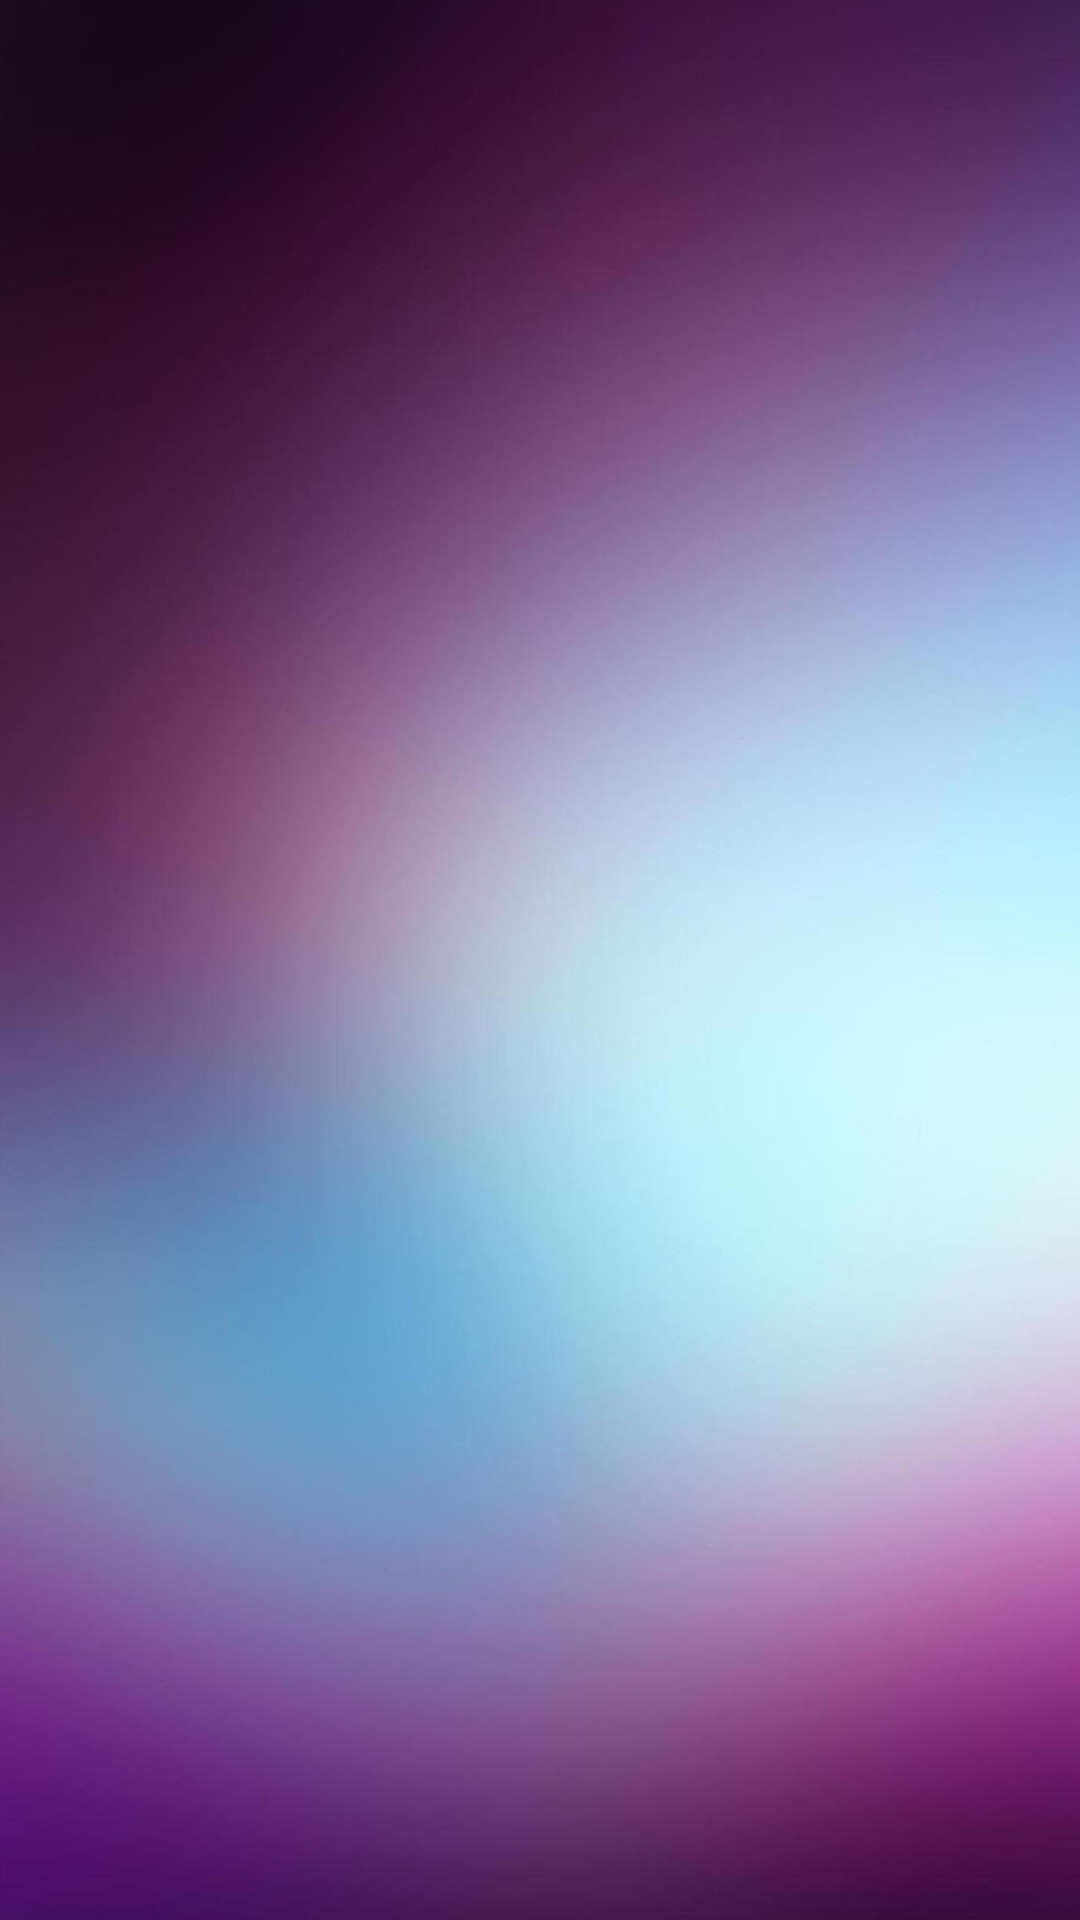 Simple Background Nexus 5 Wallpapers HD 33 Nexus 5 wallpapers and